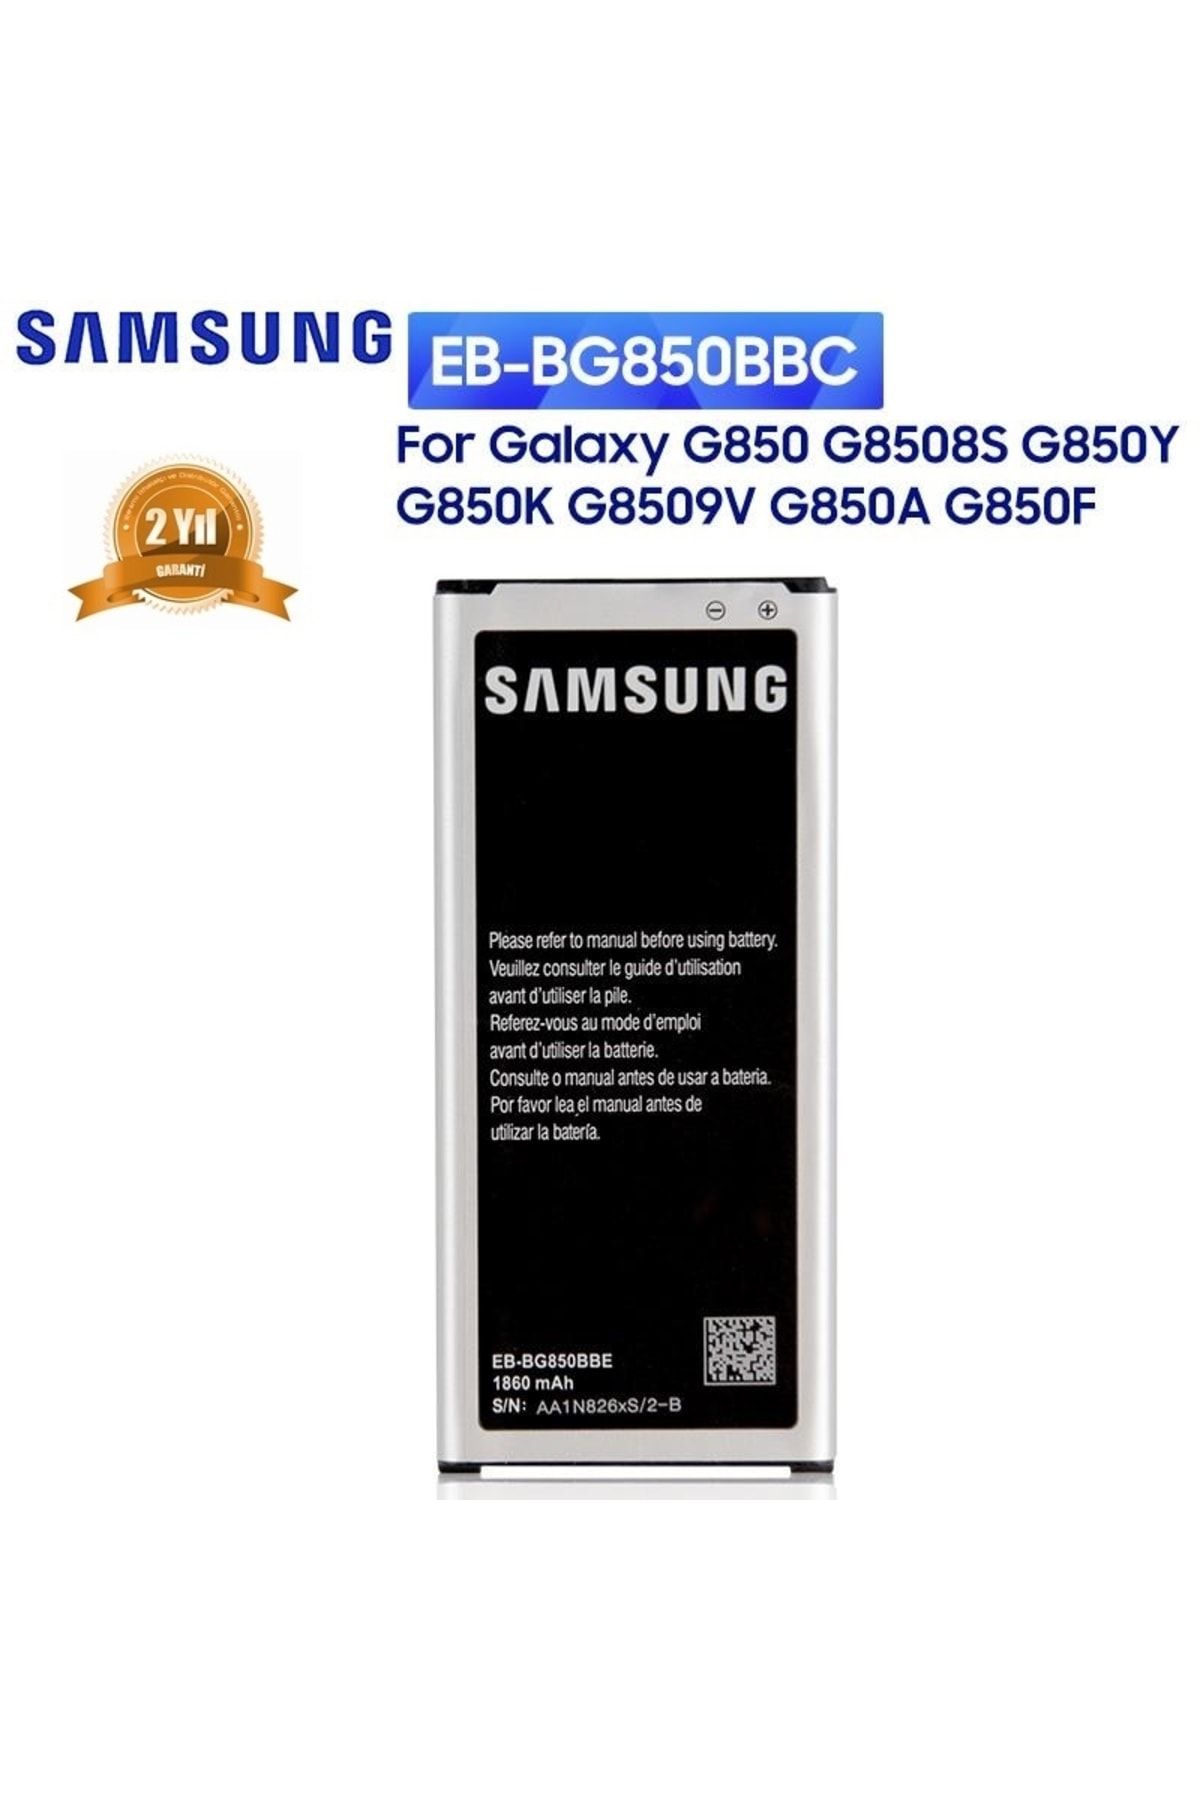 Genel Markalar Day Samsung Galaxy Alpha G850y Batarya Pil Eb-bg850bbc 1860mah Yüksek Kapasiteli 2 Yıl Garanti